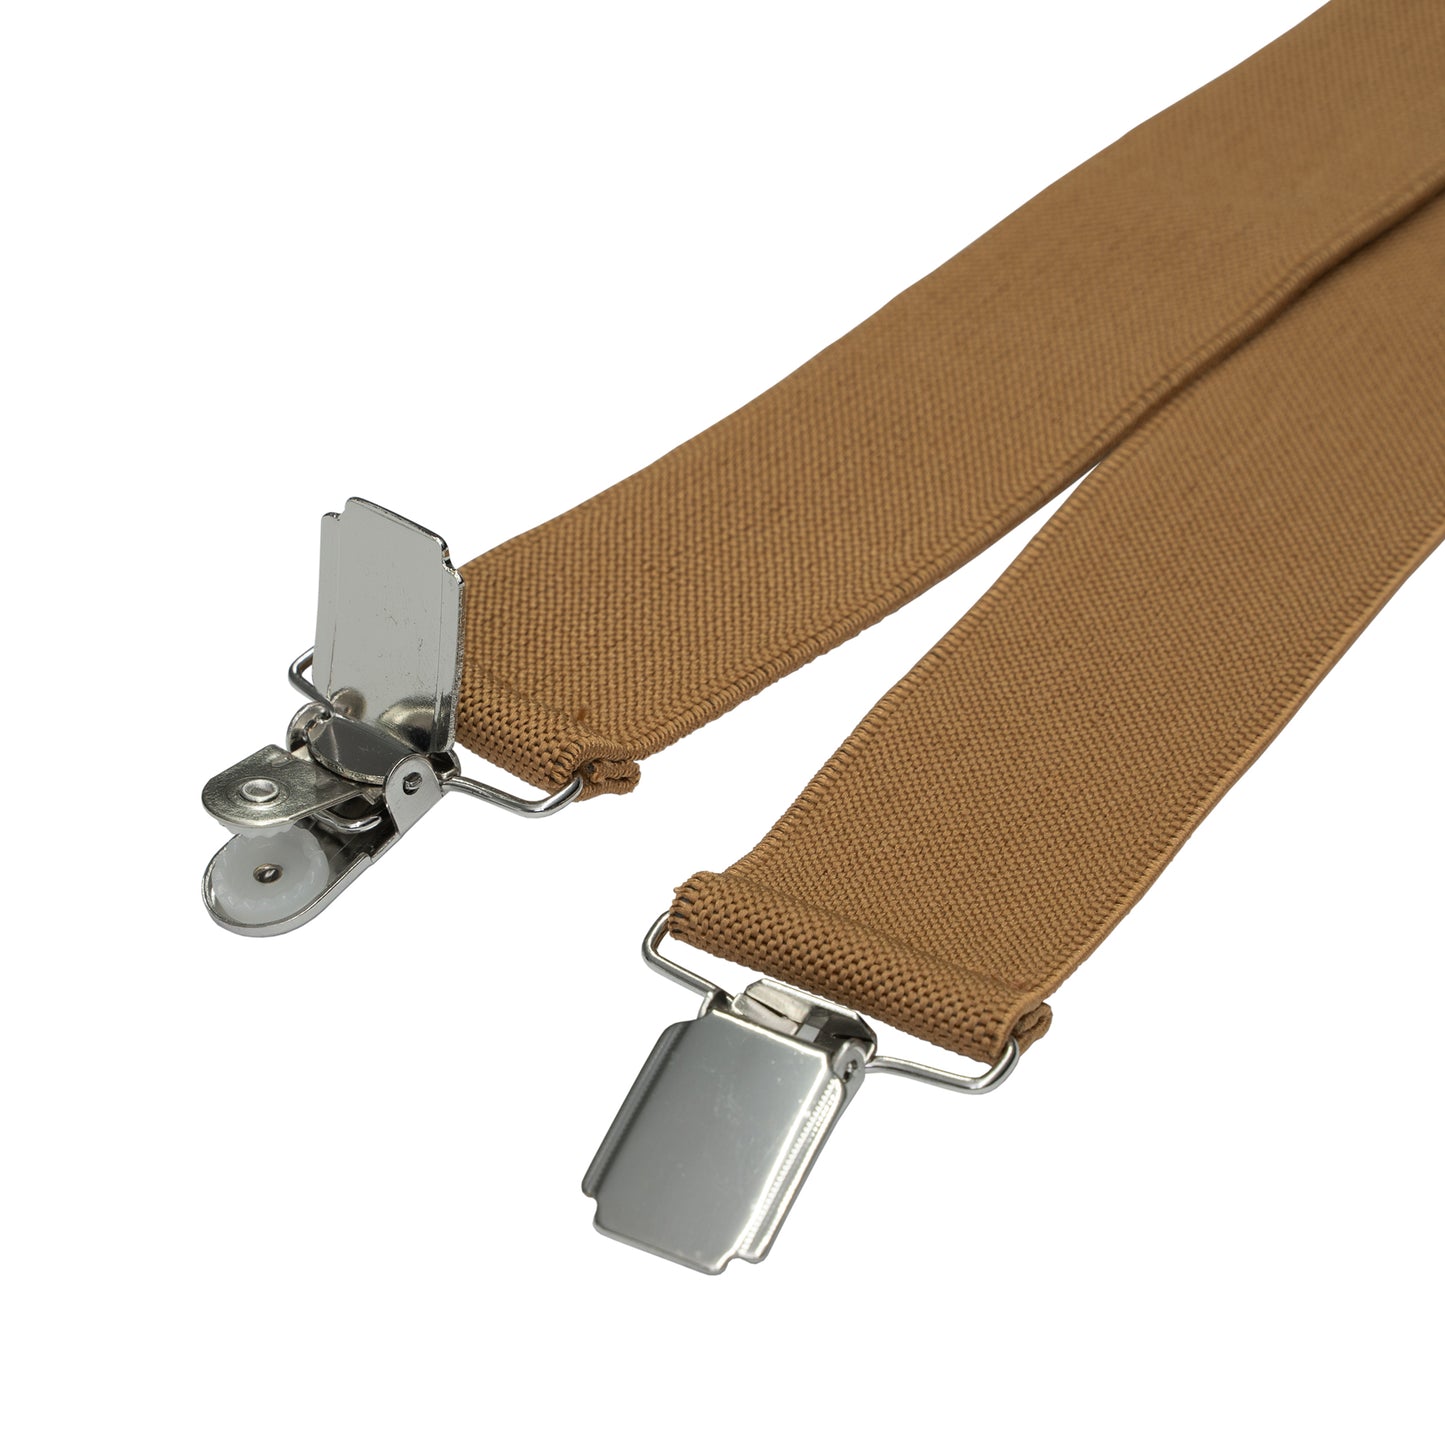 Suspenders Canvas Brown | Hosenträger